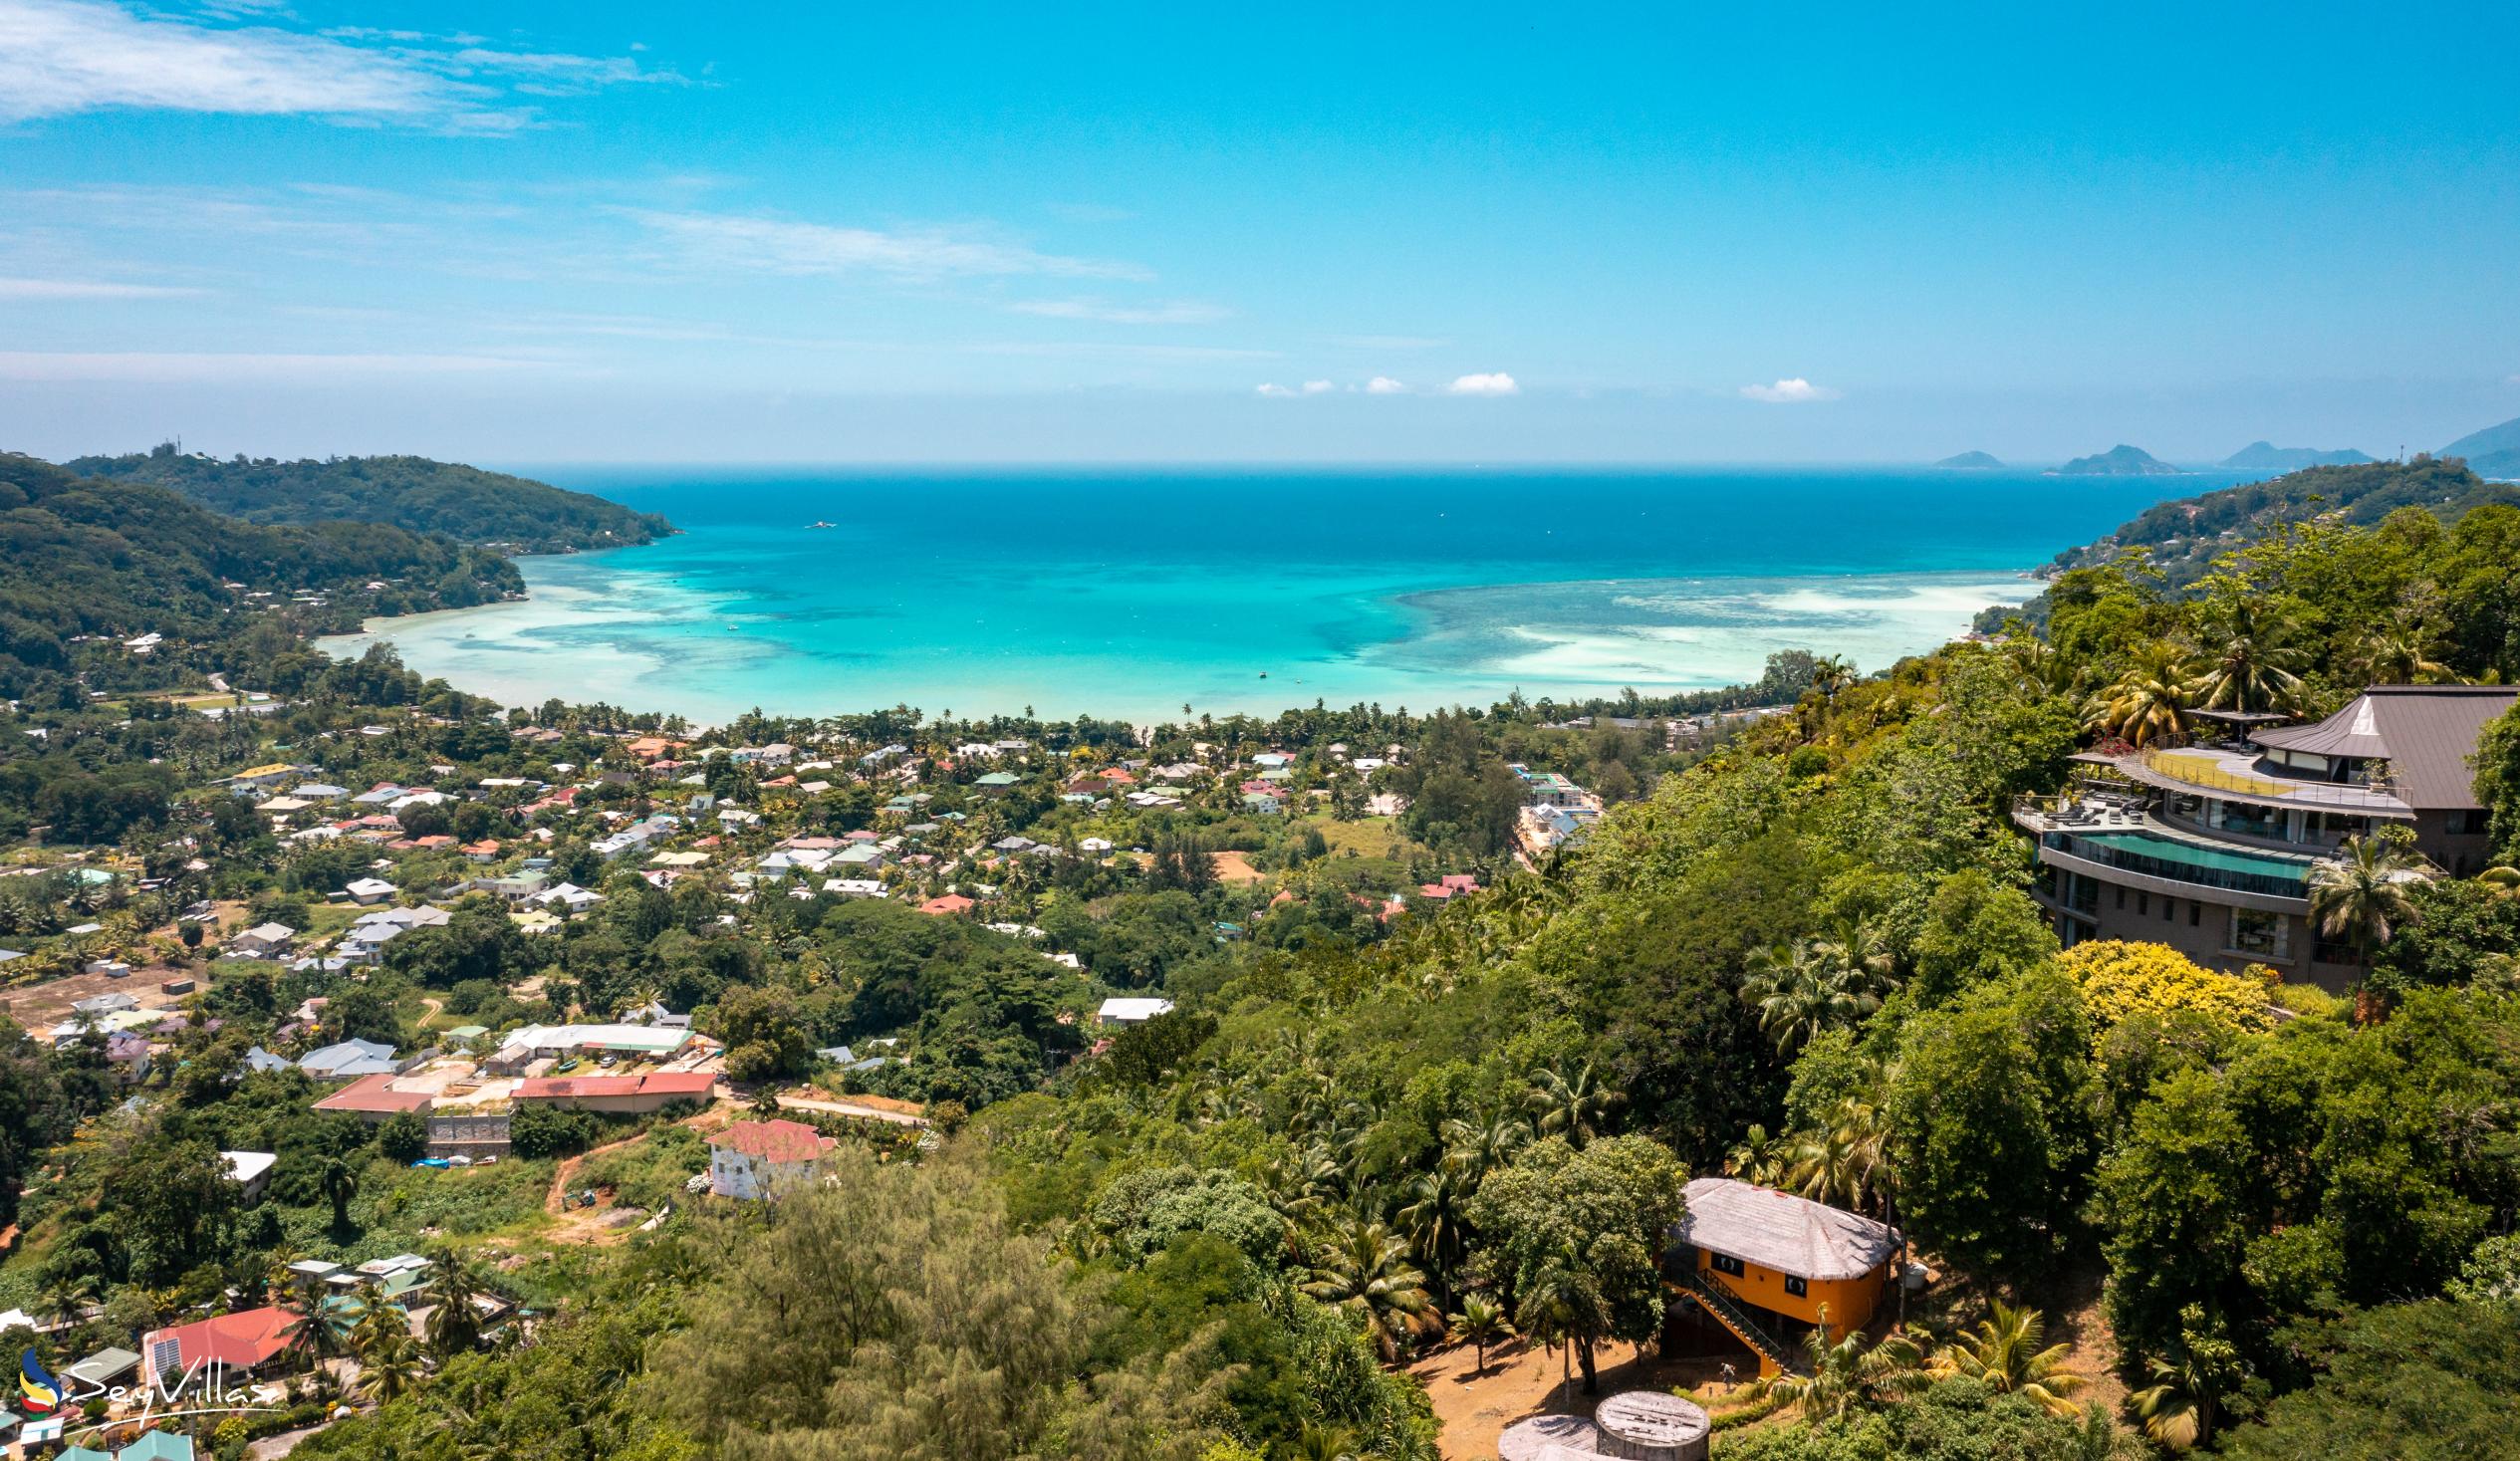 Foto 27: Residence Monte Cristo - Location - Mahé (Seychelles)